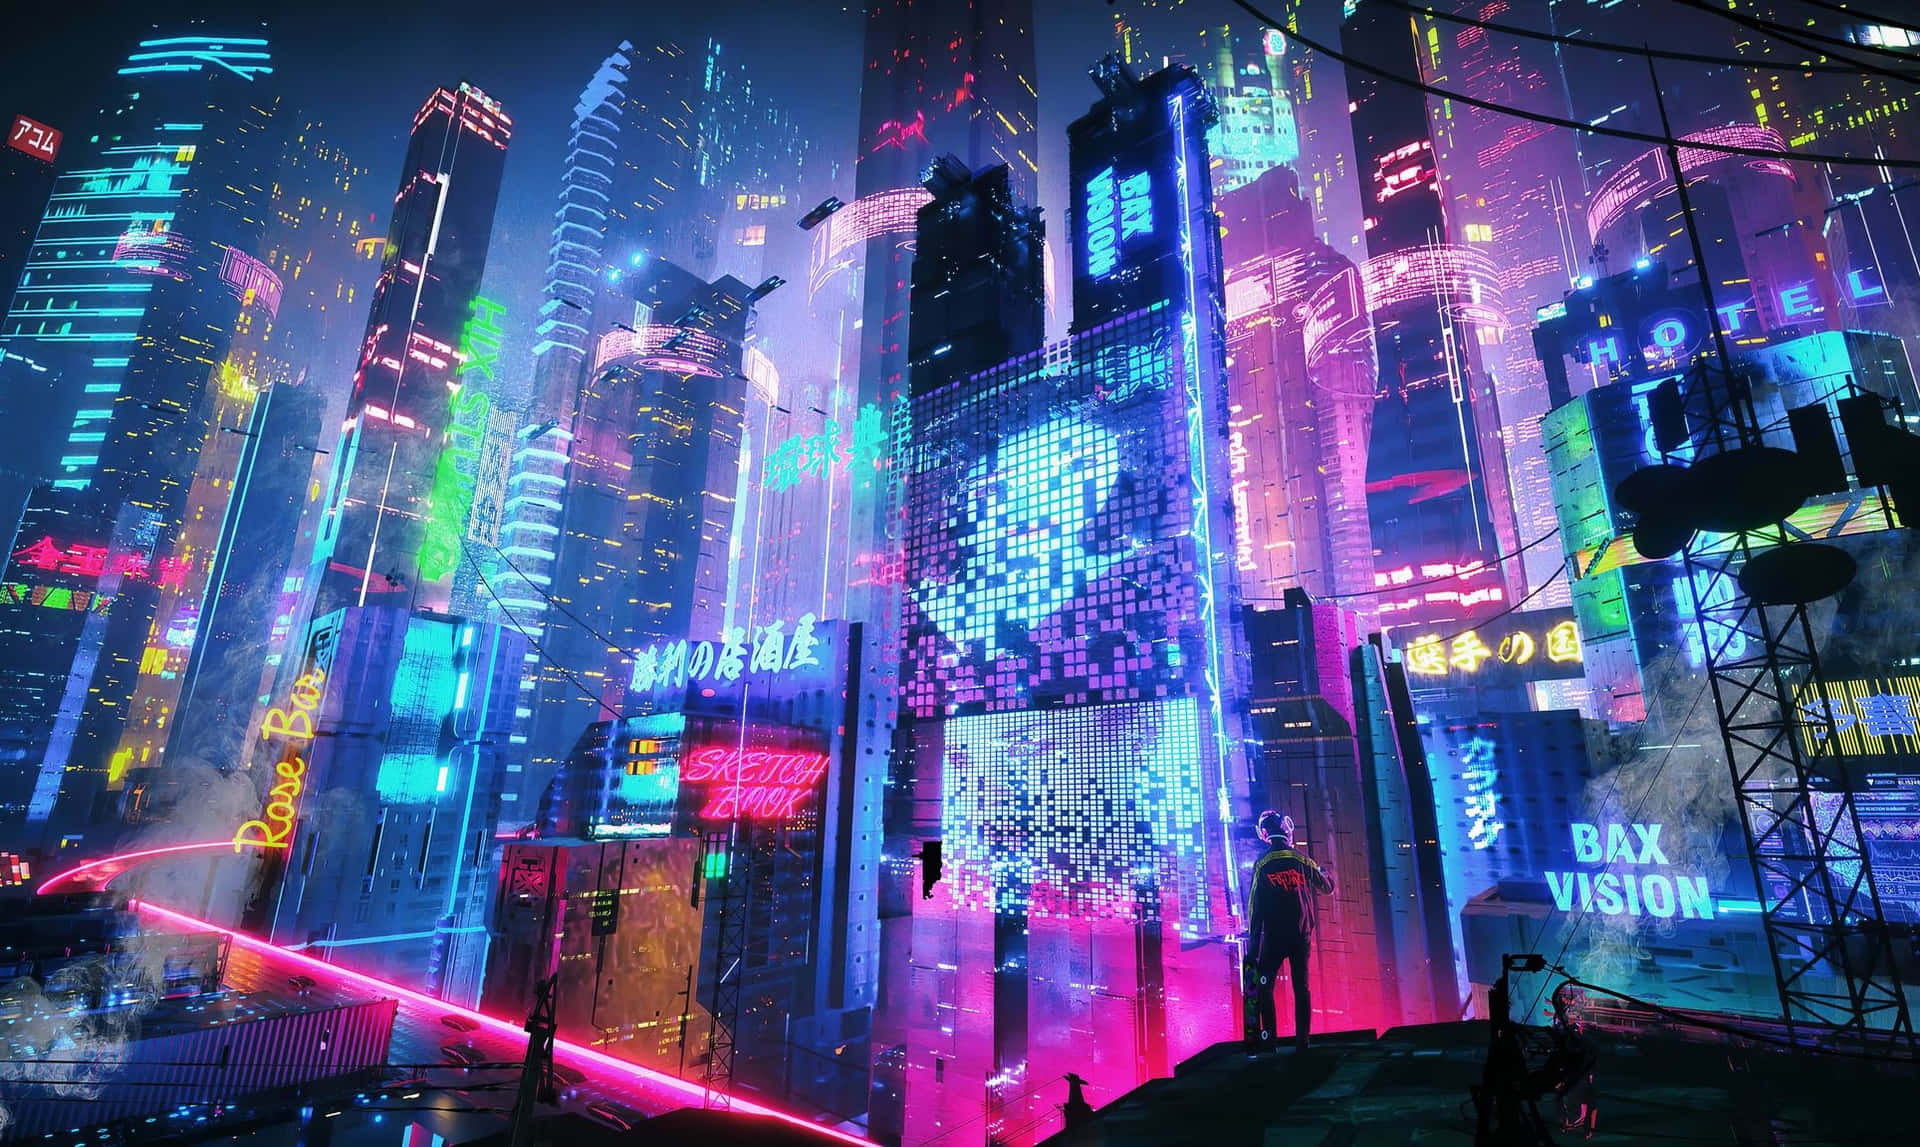 Enter the Dreamlike World of Neon City